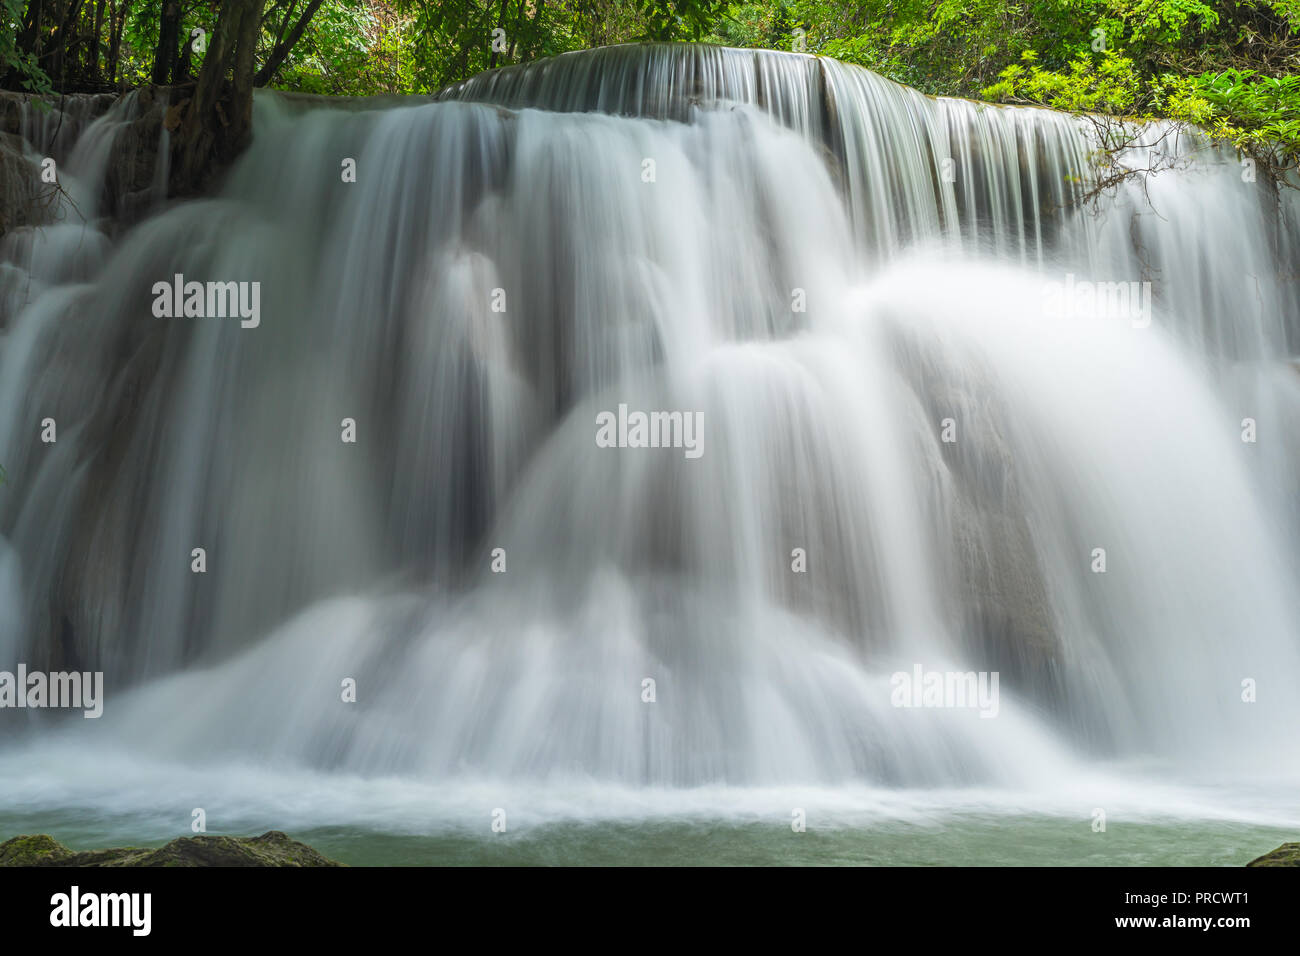 Dreamy waterfall. Stock Photo